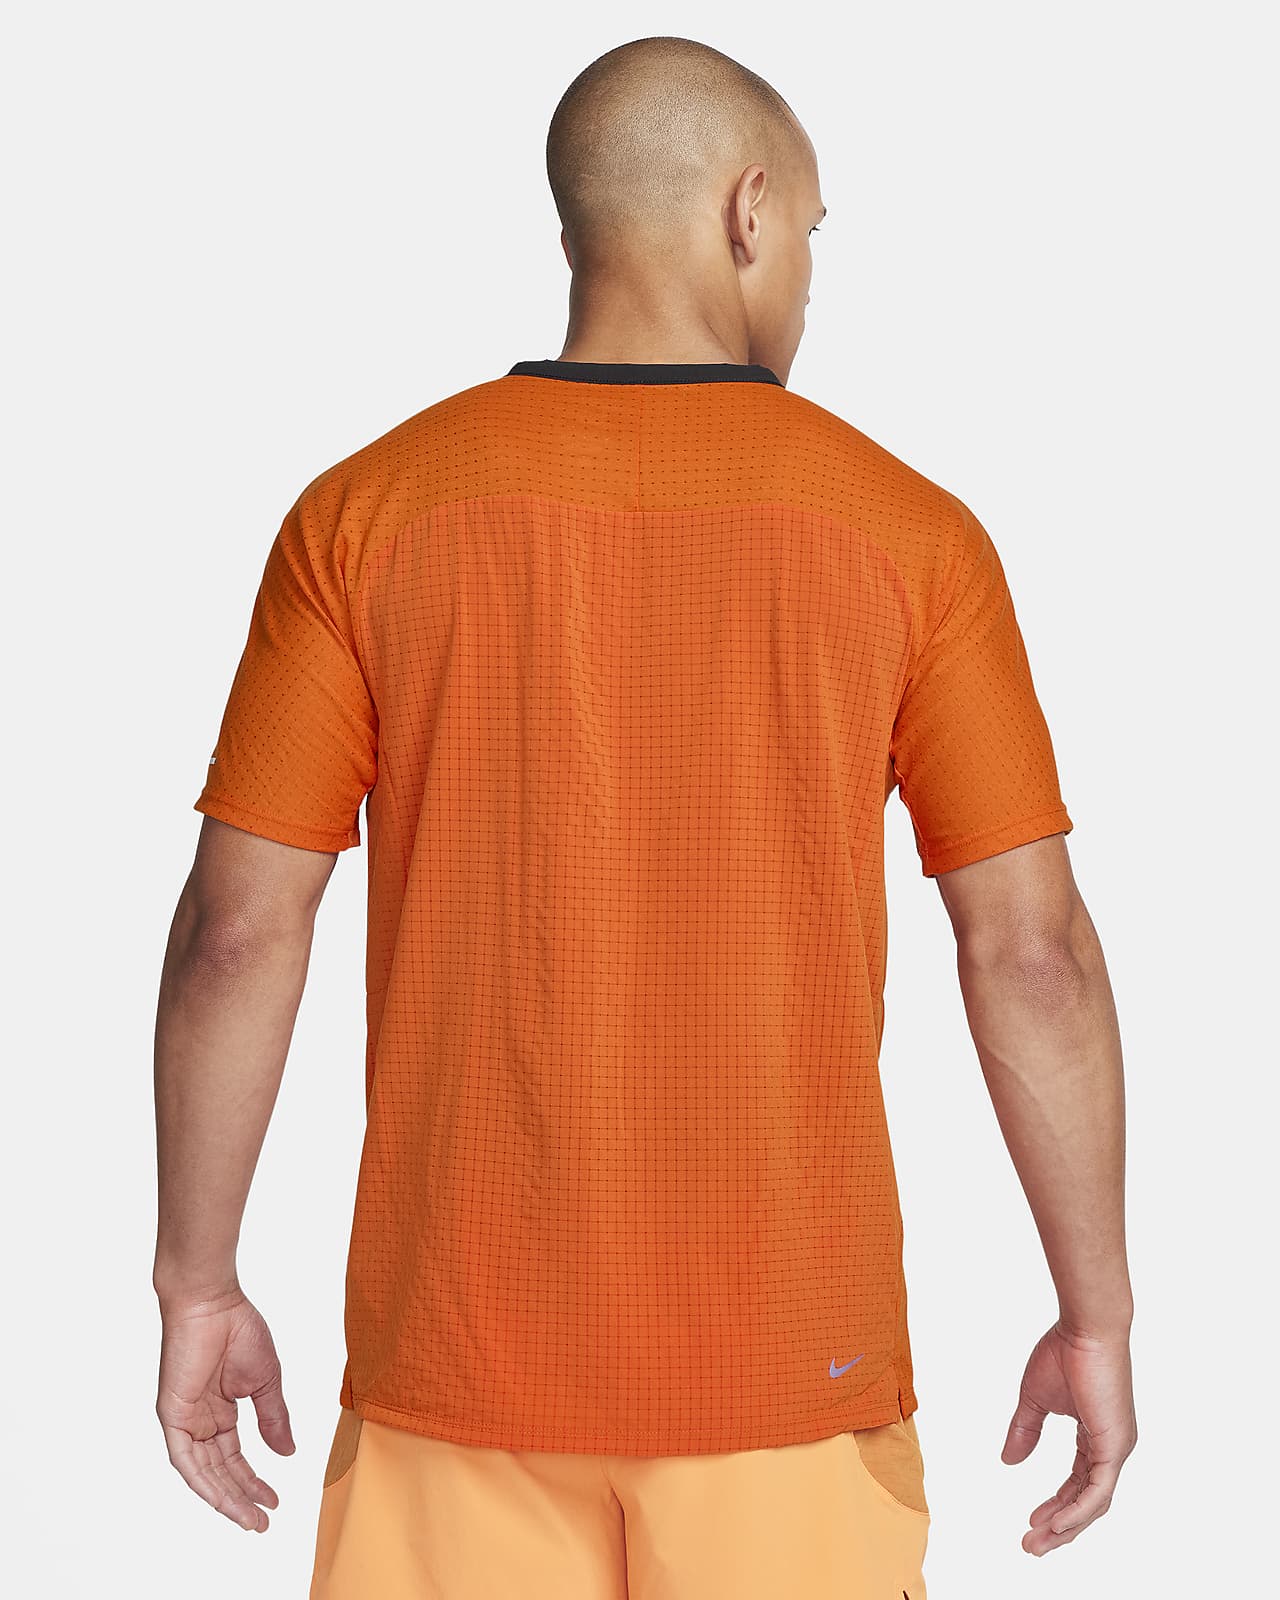 Nike Dri-FIT Men's Short-Sleeve Basketball Top